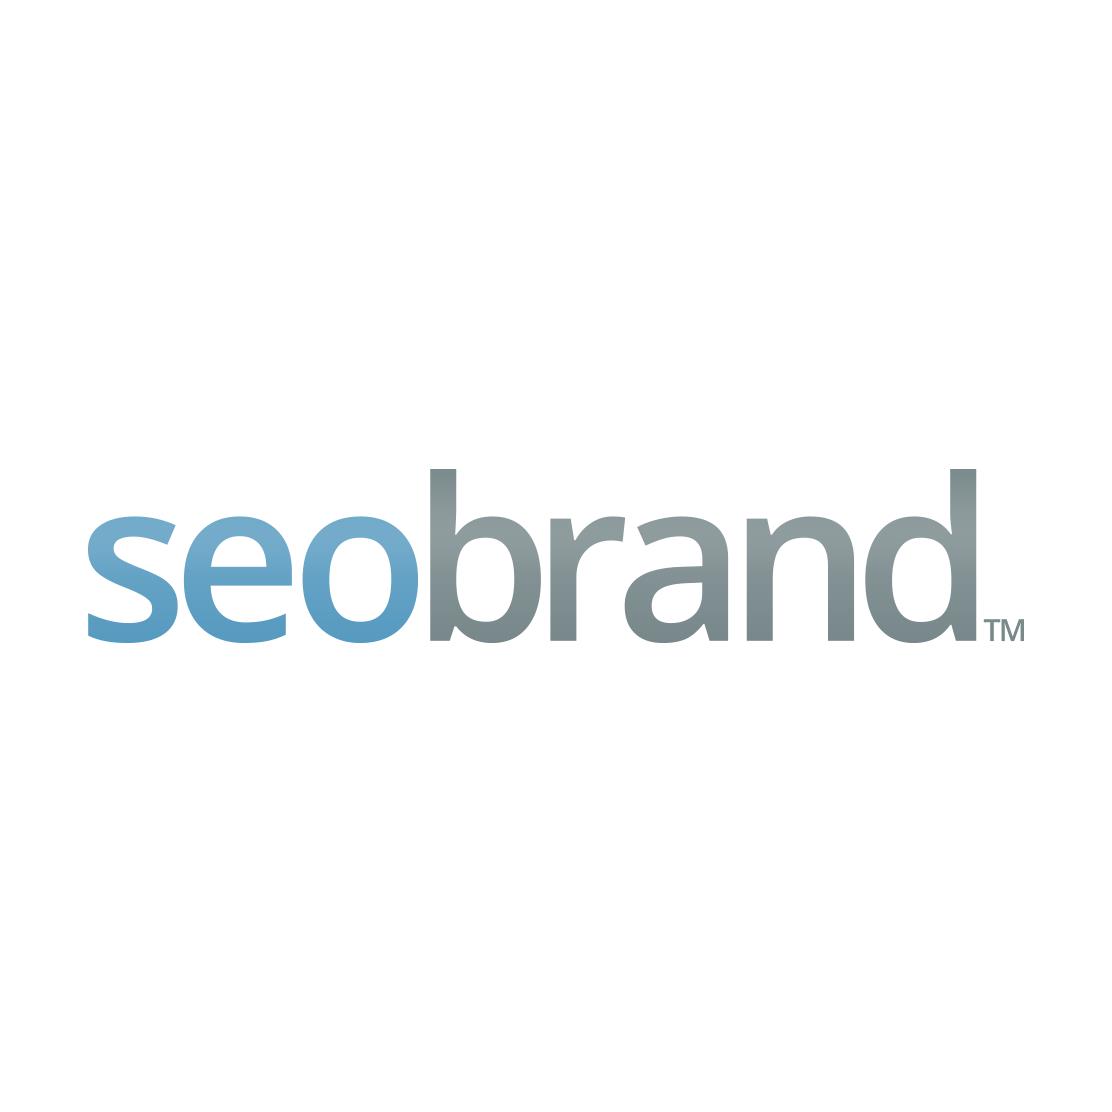 Top Reputation Management Company Logo: SEO Brand